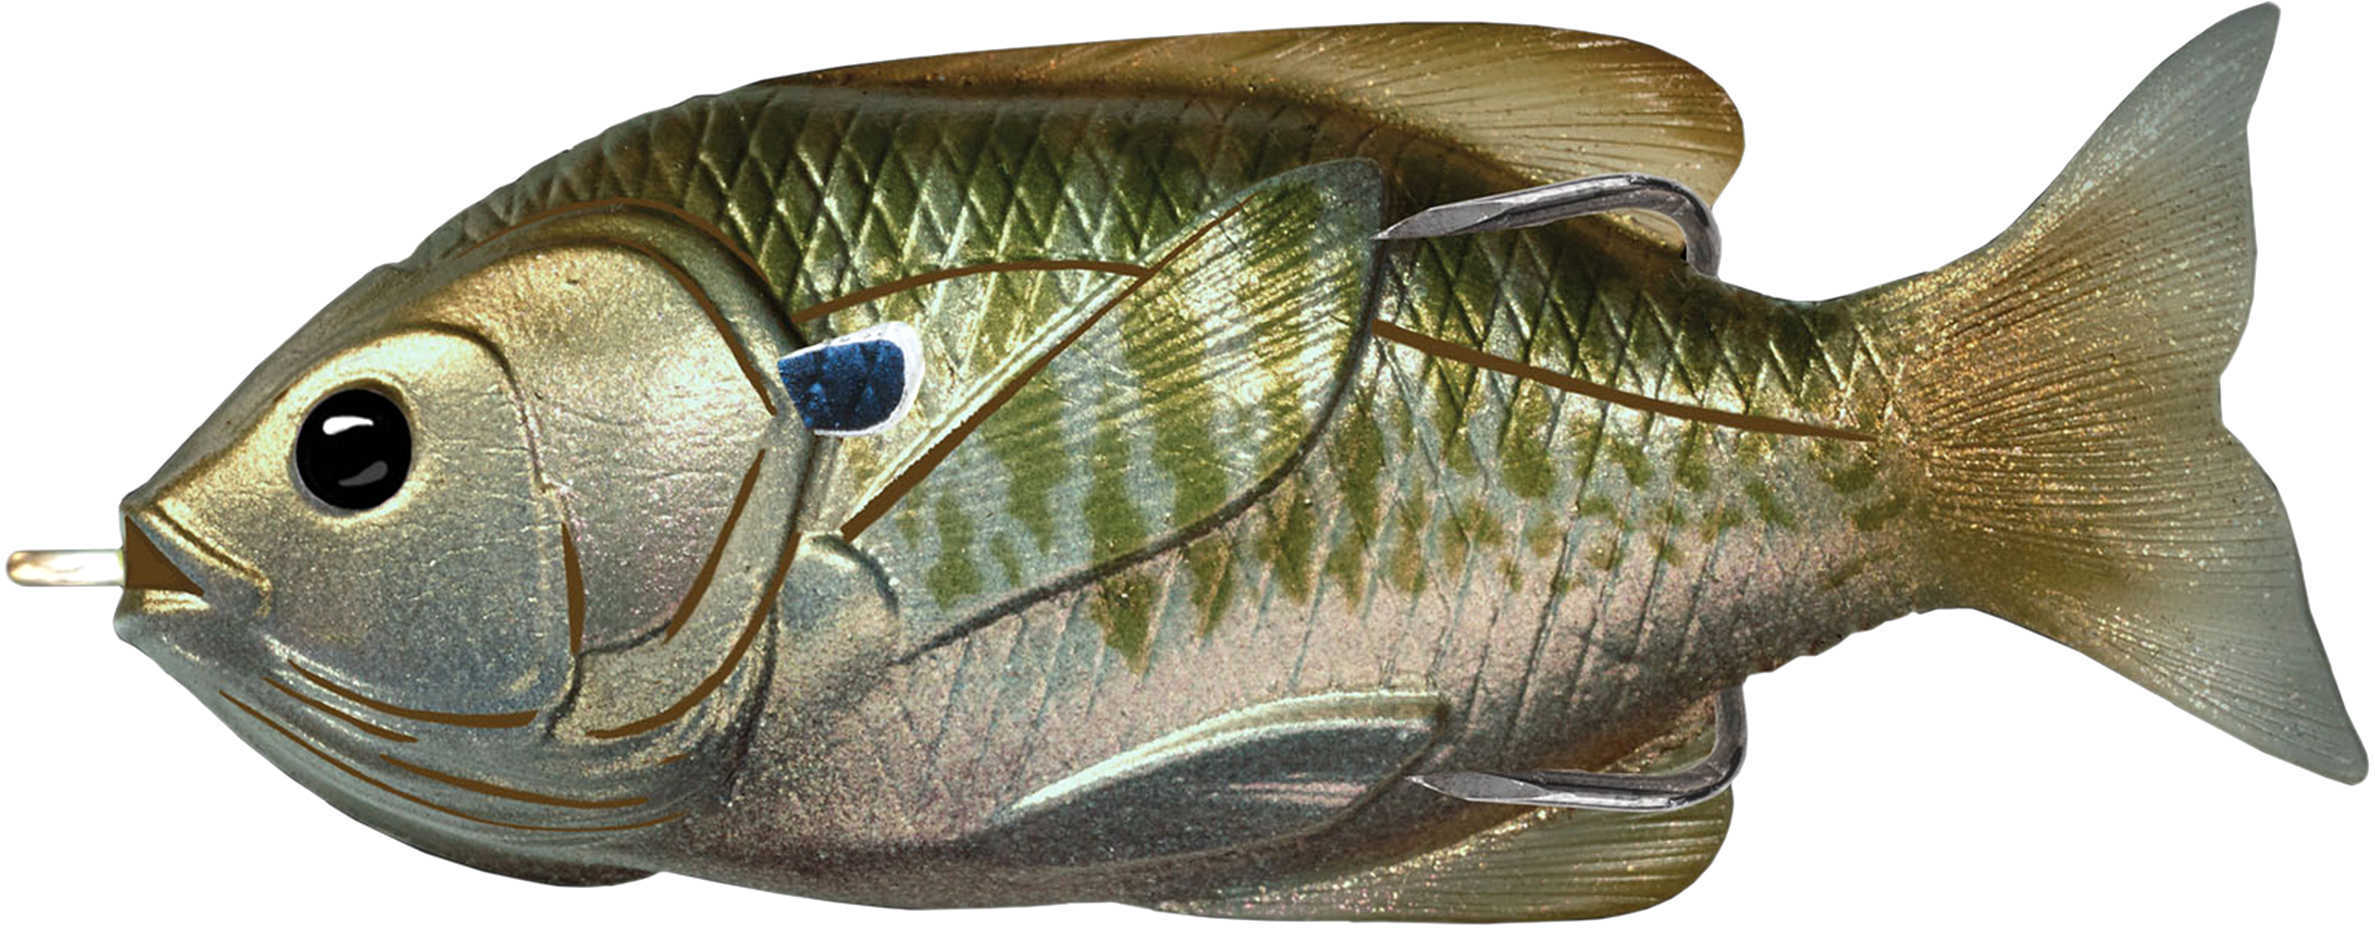 LiveTarget Lures Sunfish Hollow Body Freshwater, 4" Length, 3/4 oz, Topwater Depth, Olive/Metallic Bluegill, Per 1 Md: S